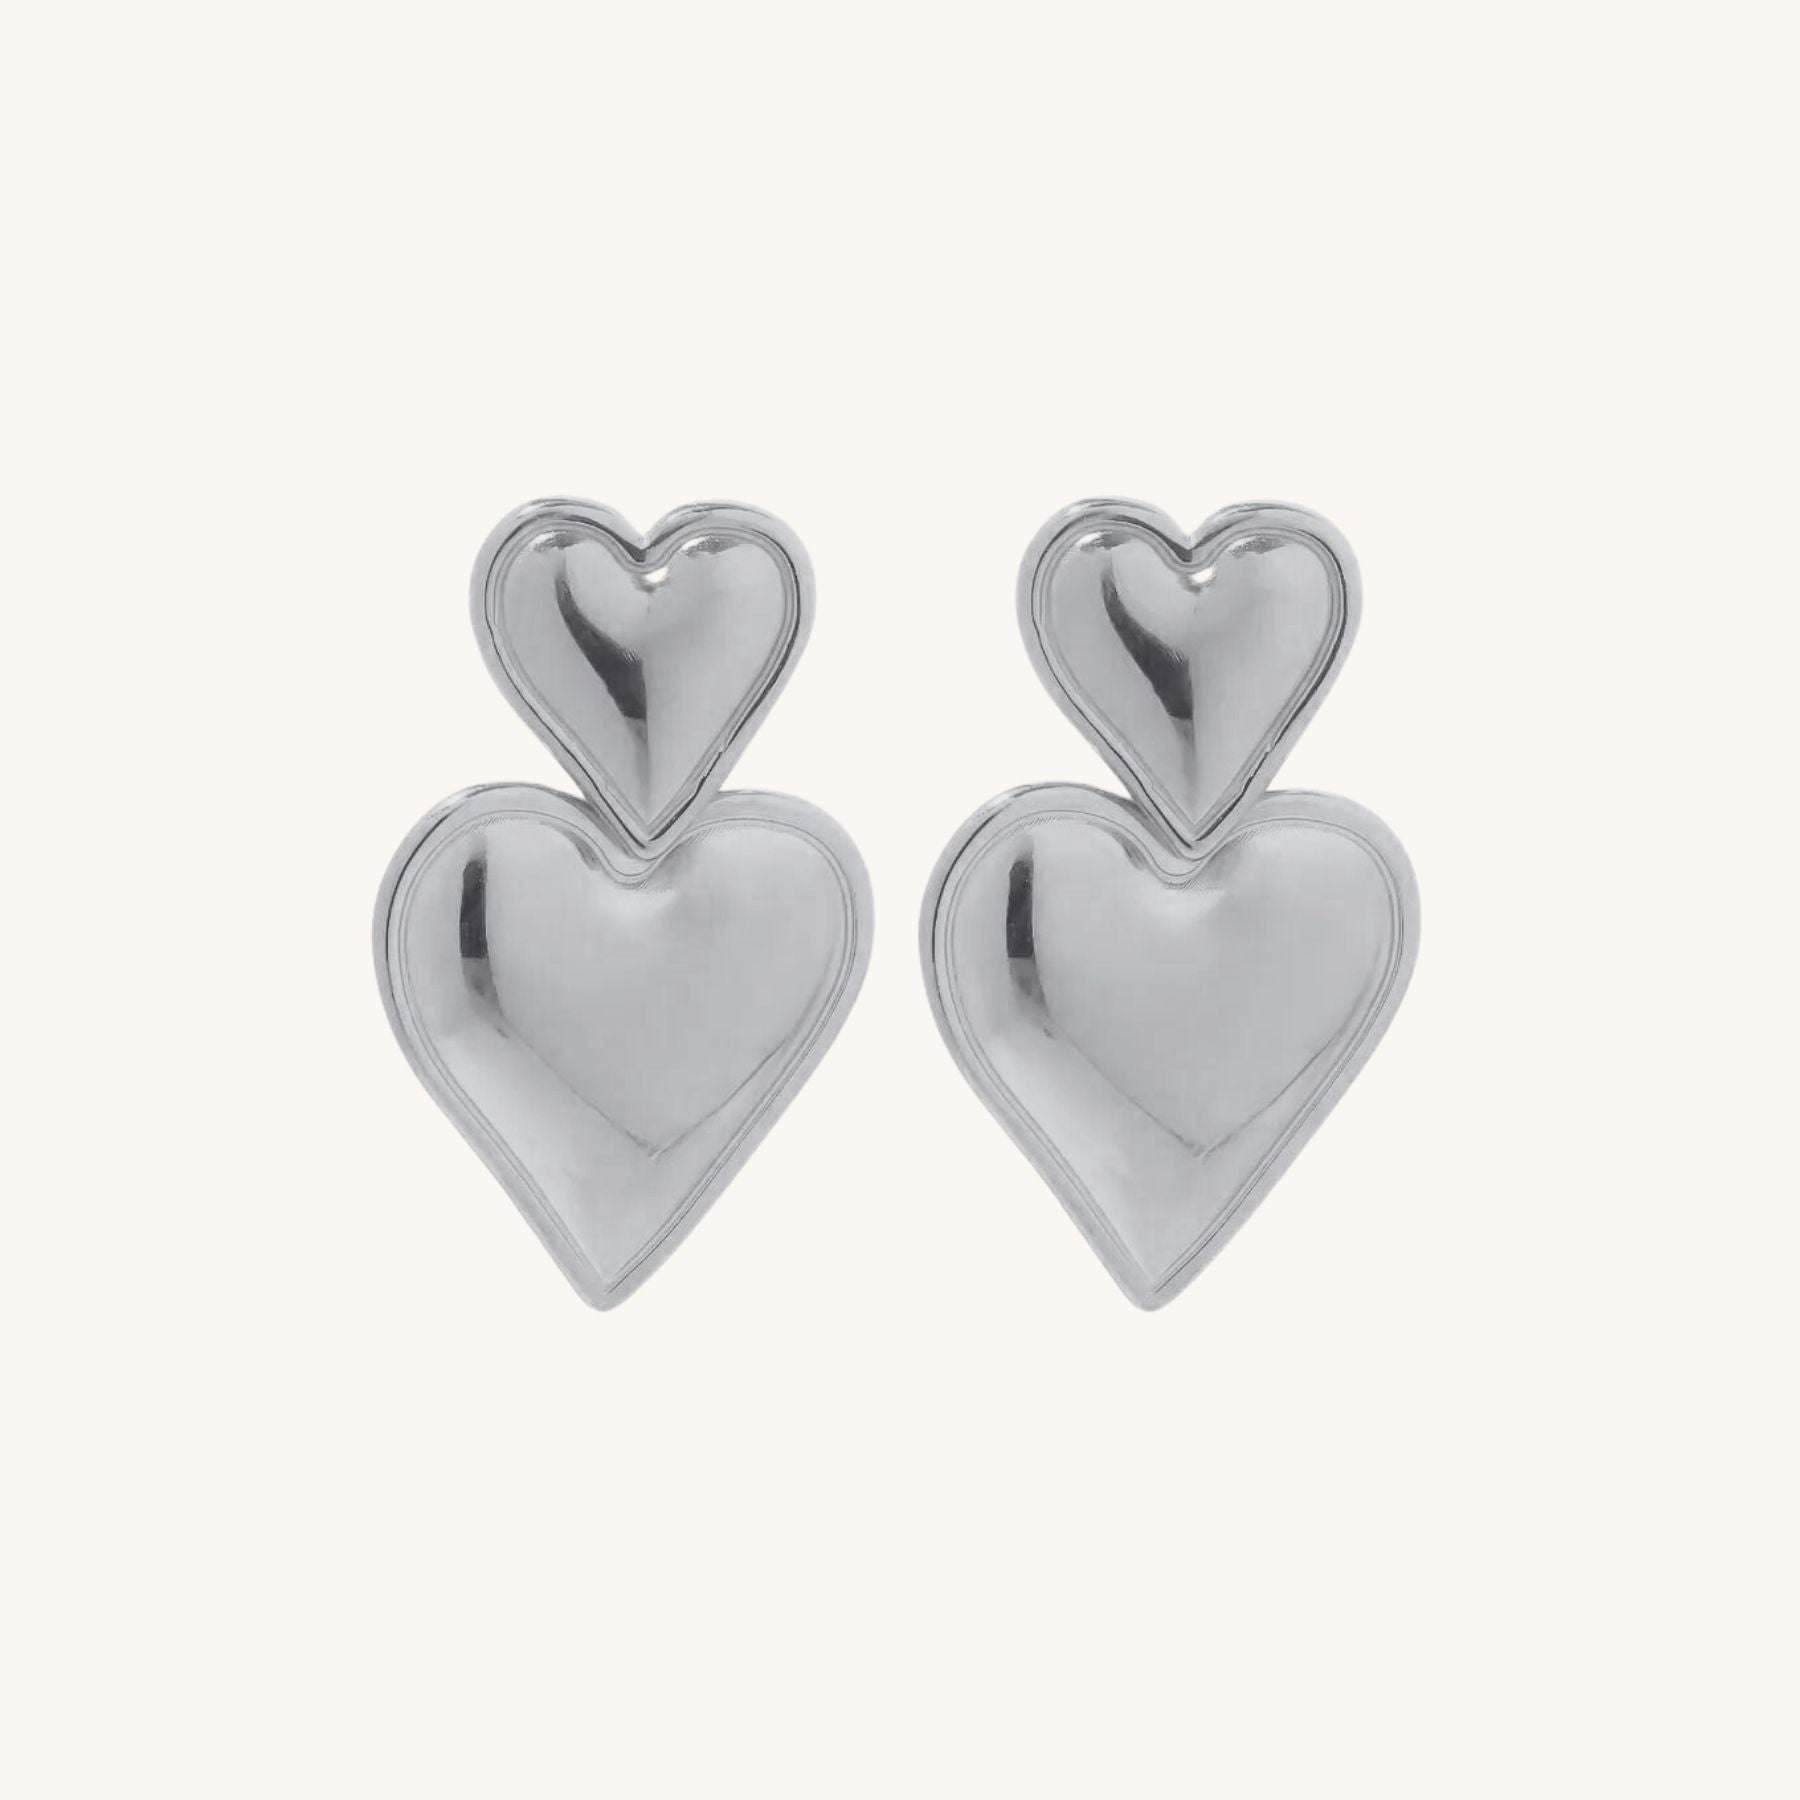 Lovers Earrings